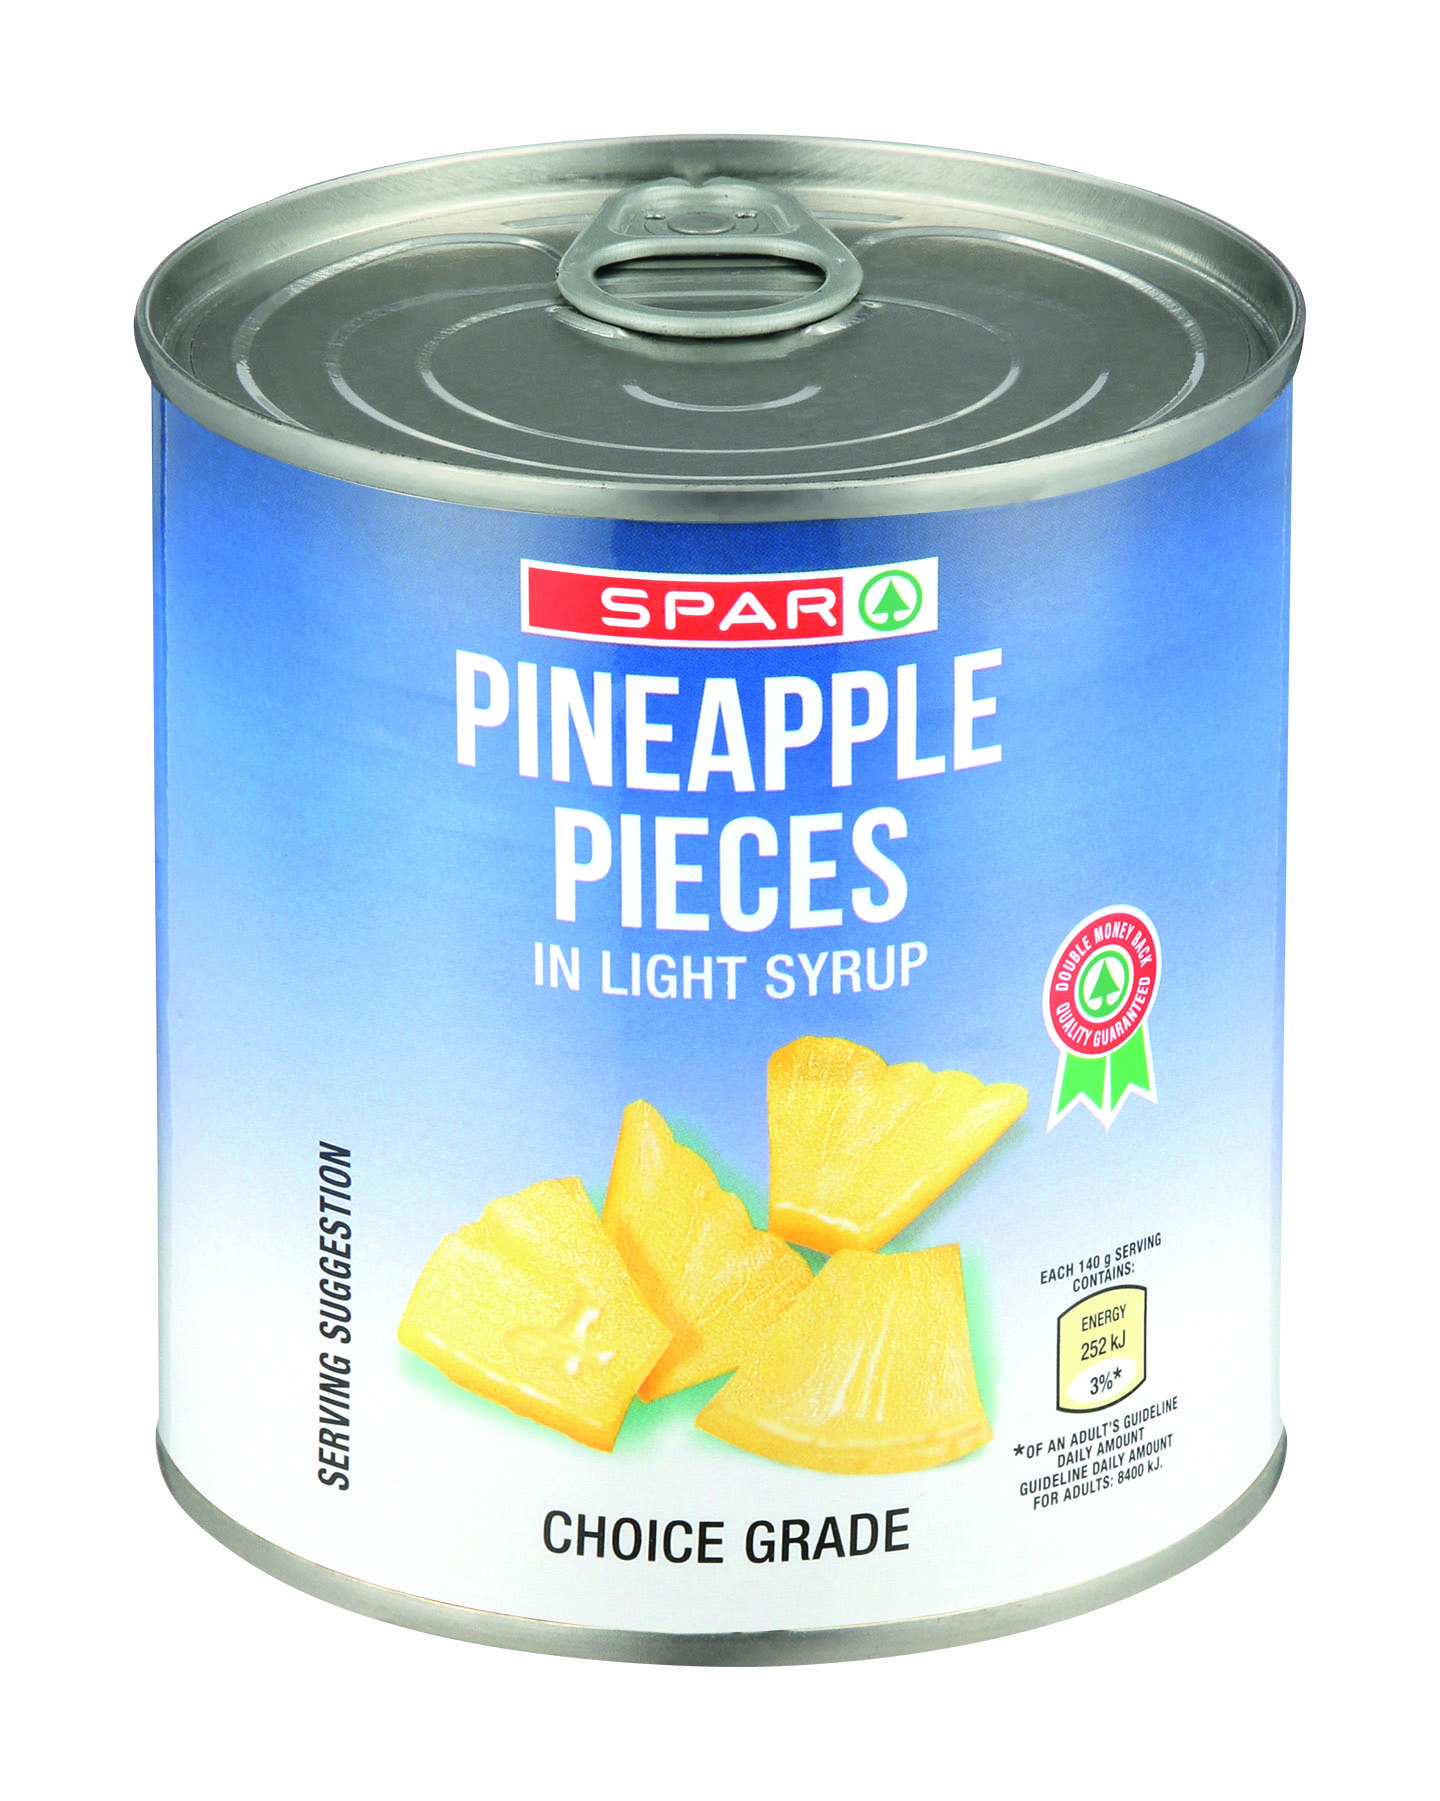 pineapple pieces